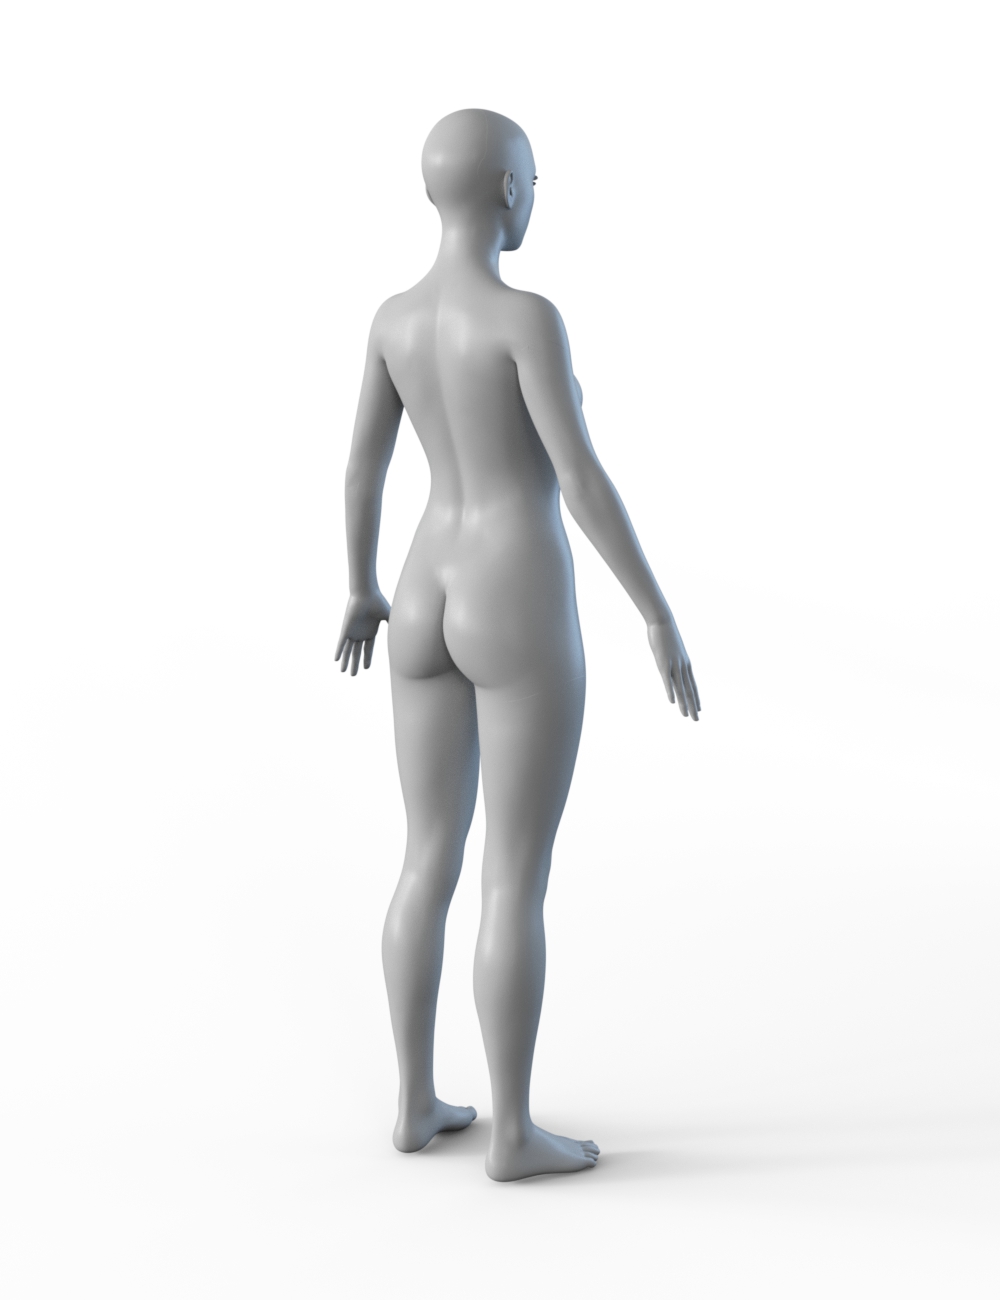 FBX- Base Female Swimsuit by: Paleo, 3D Models by Daz 3D